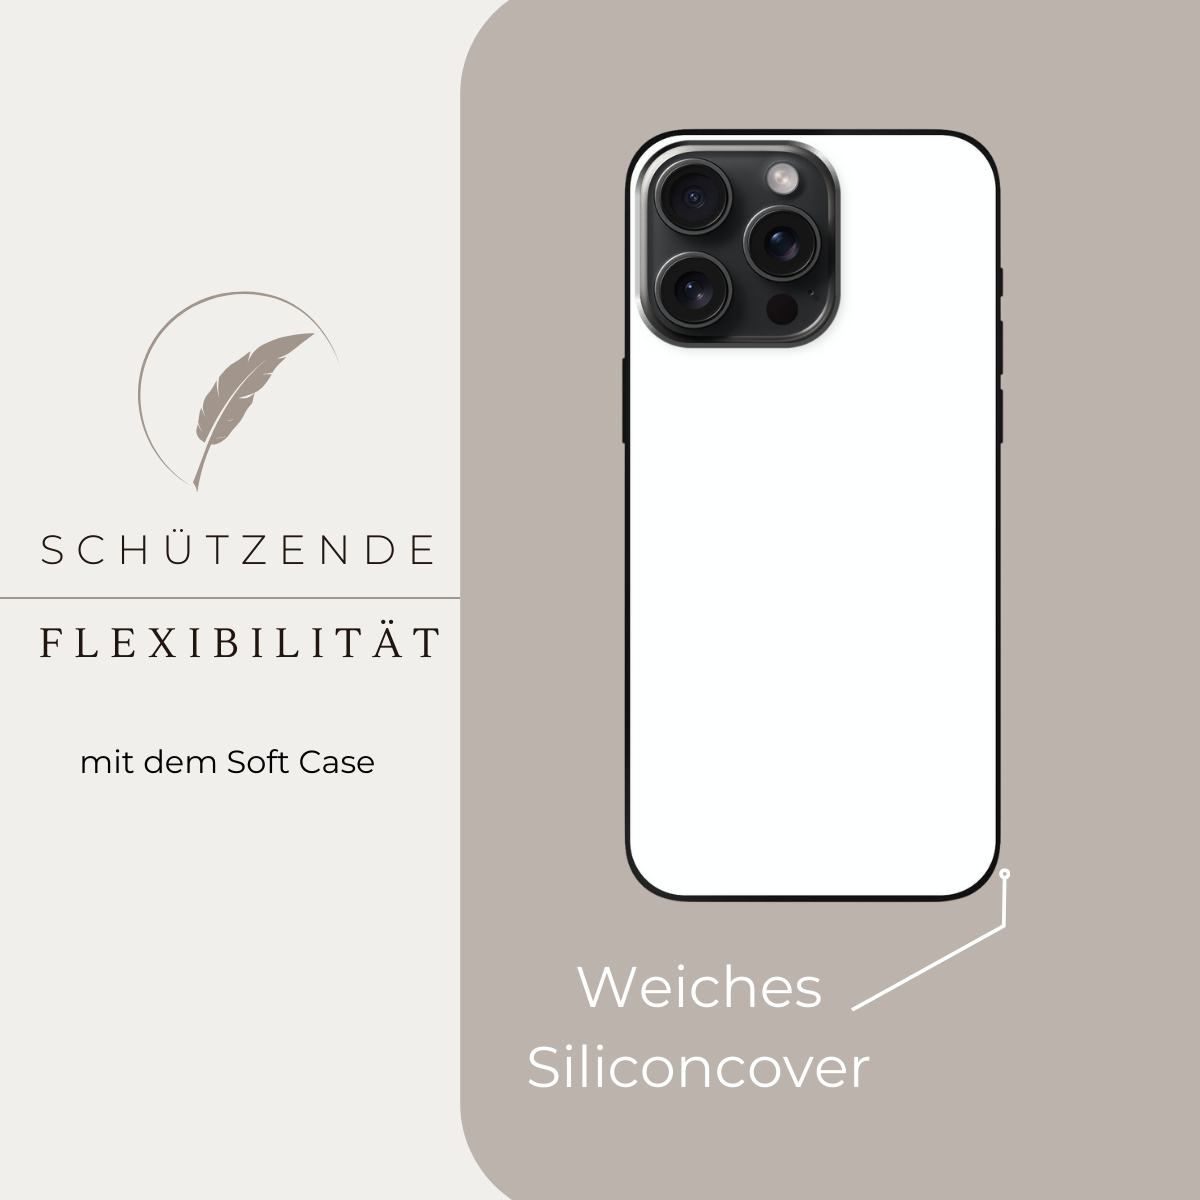 Sicherheit - Believe in yourself - iPhone 8 Handyhülle